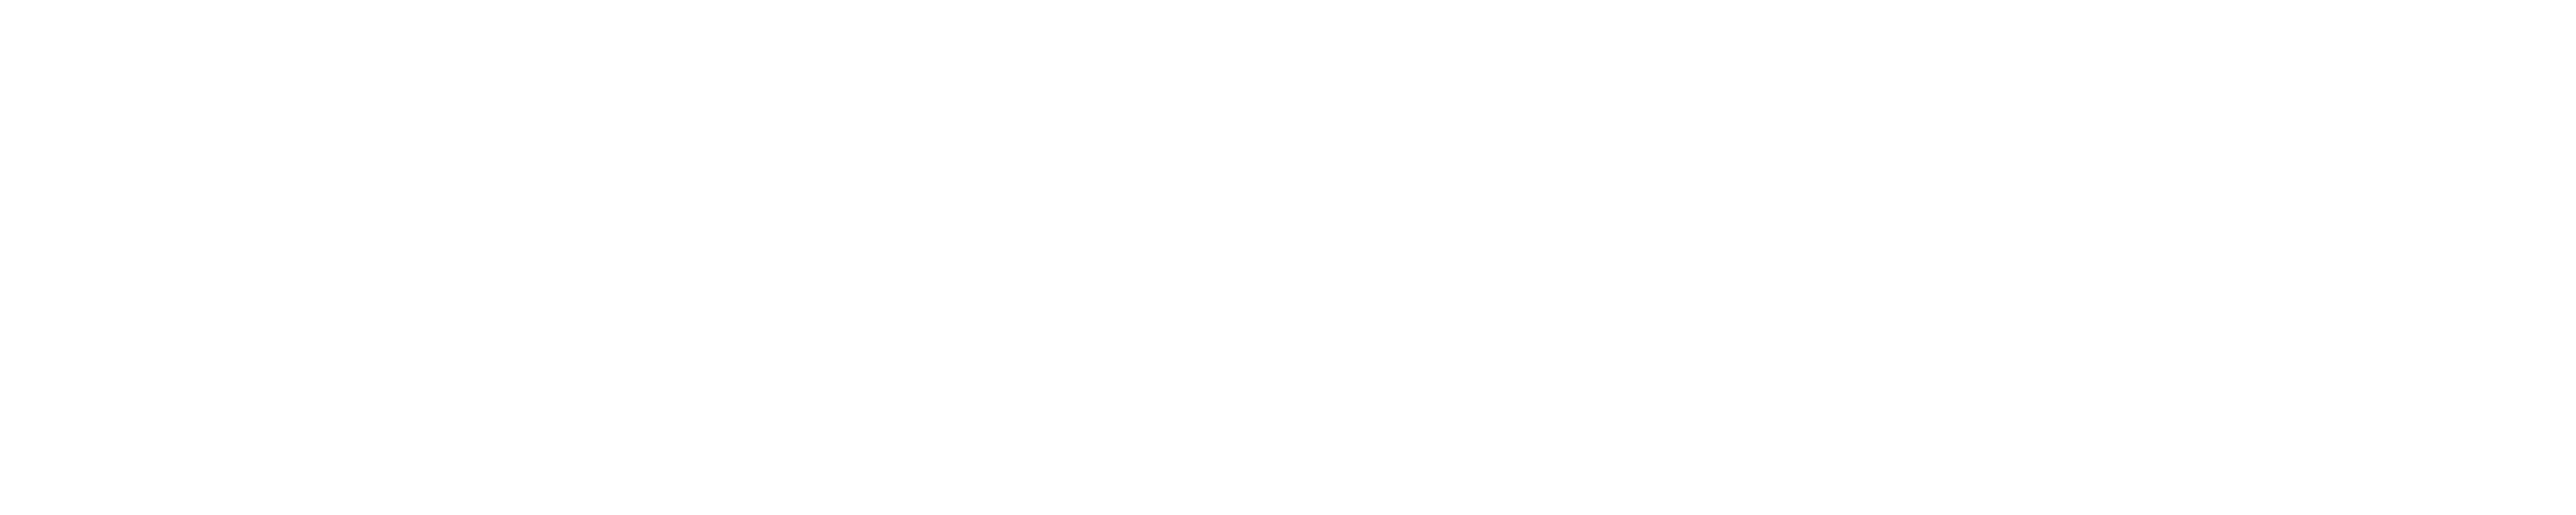 logo_8-28-2021